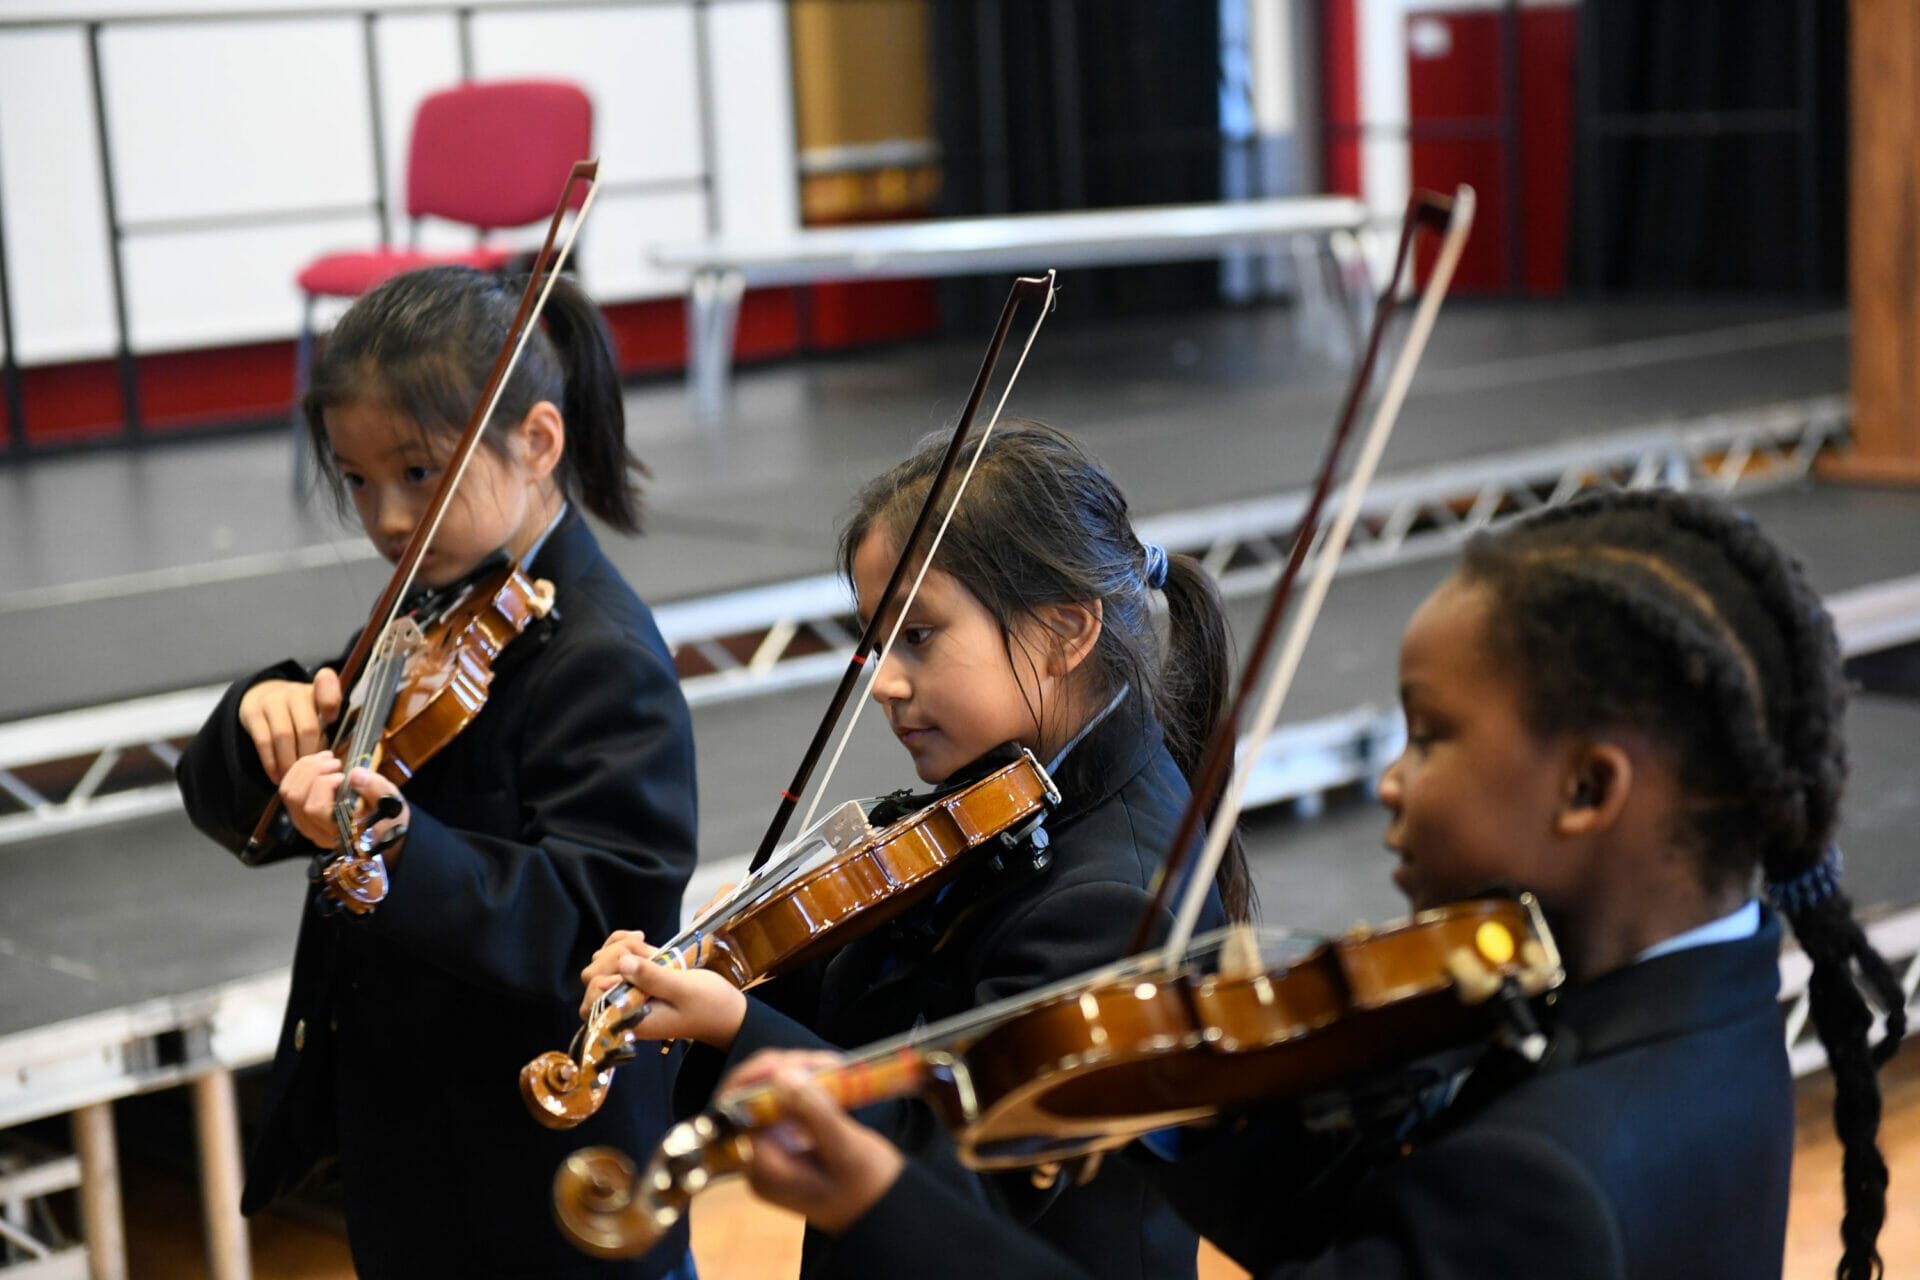 Three girls play violin in the School Hall.